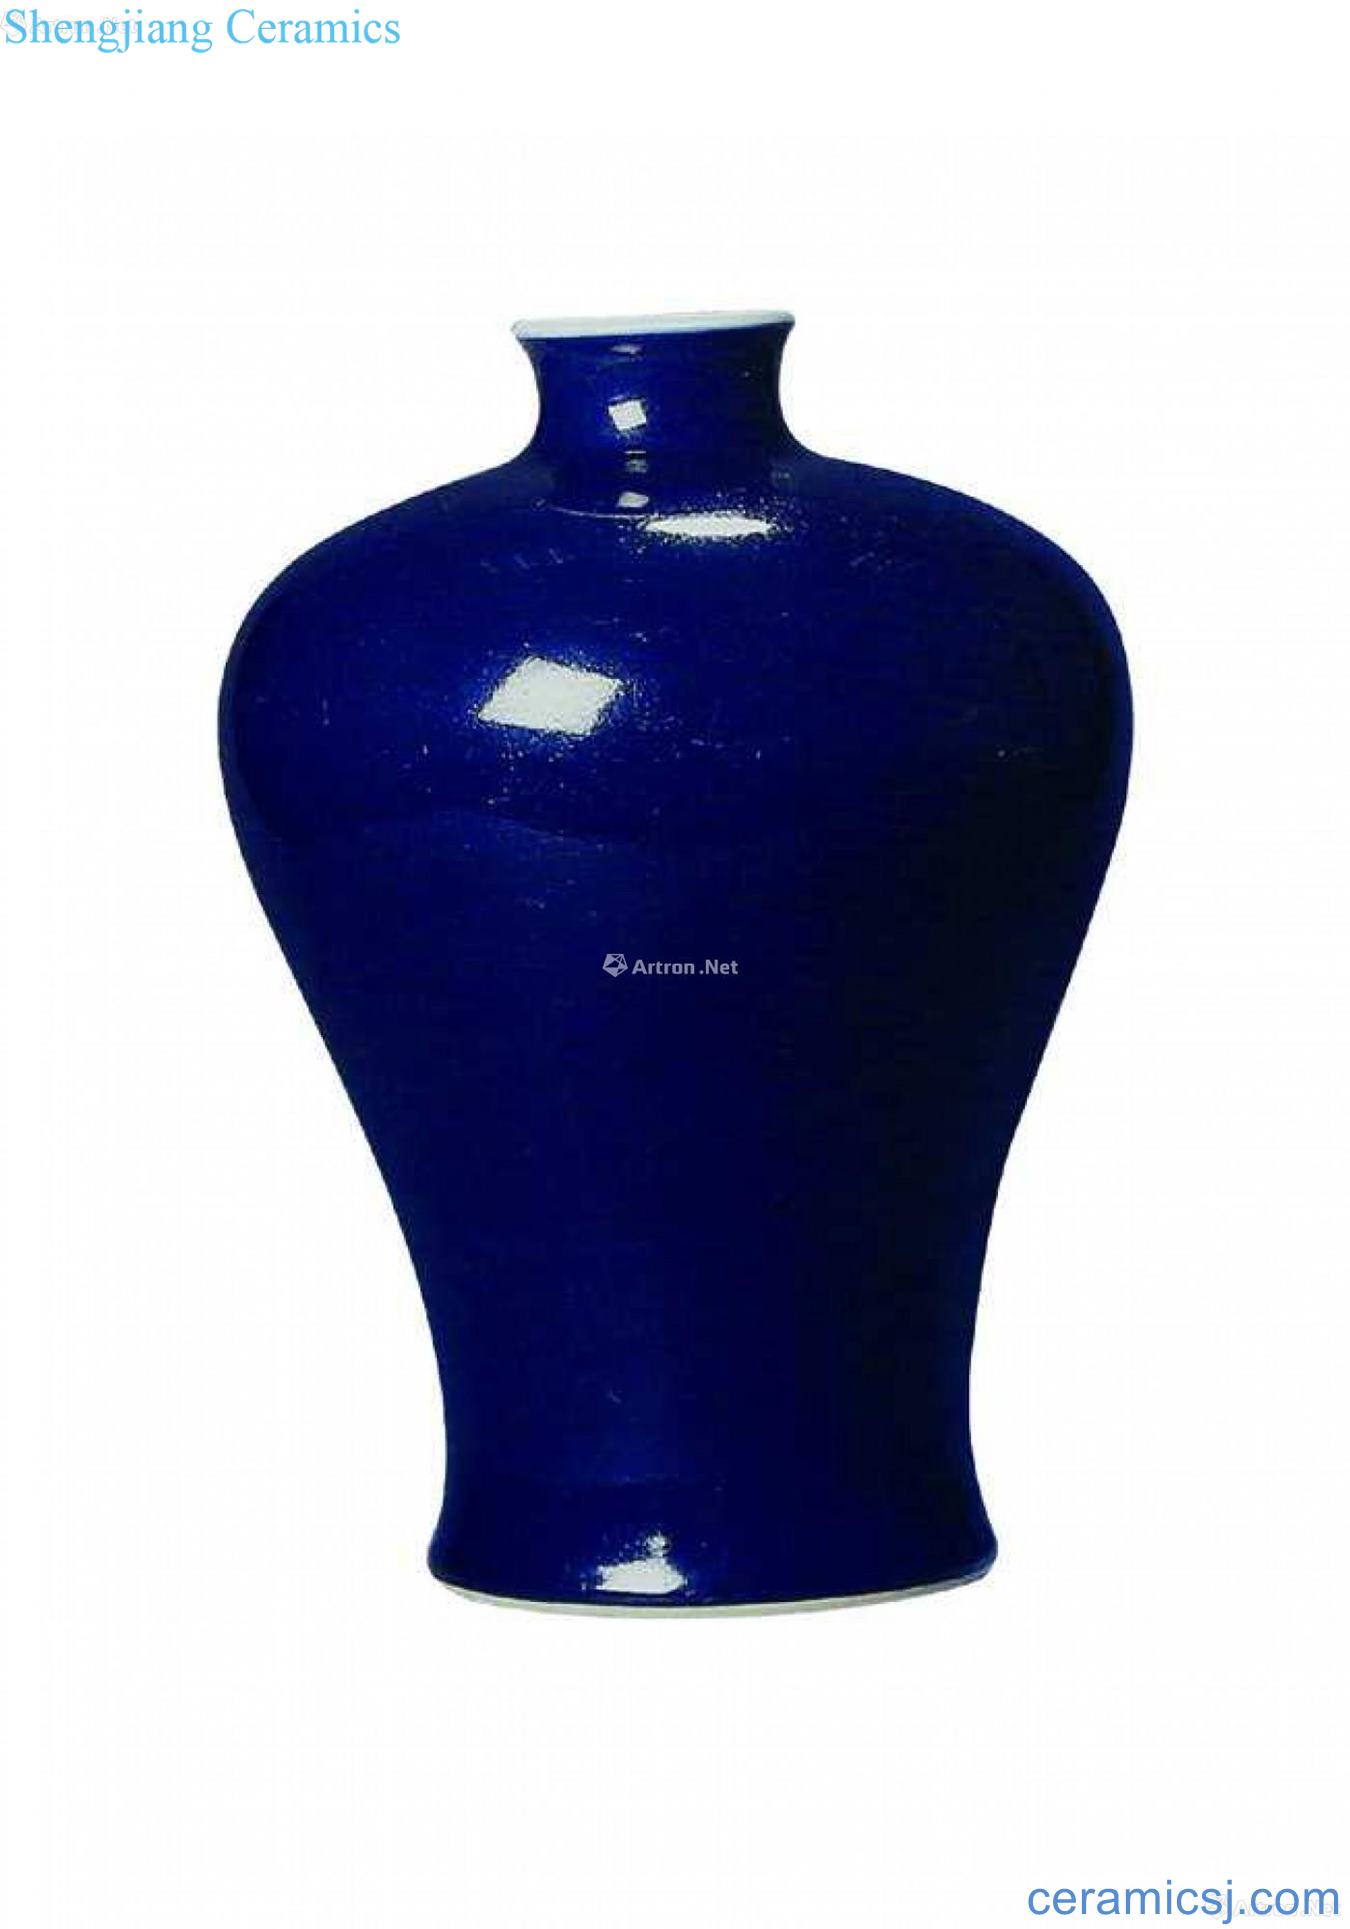 The blue glaze plum bottle